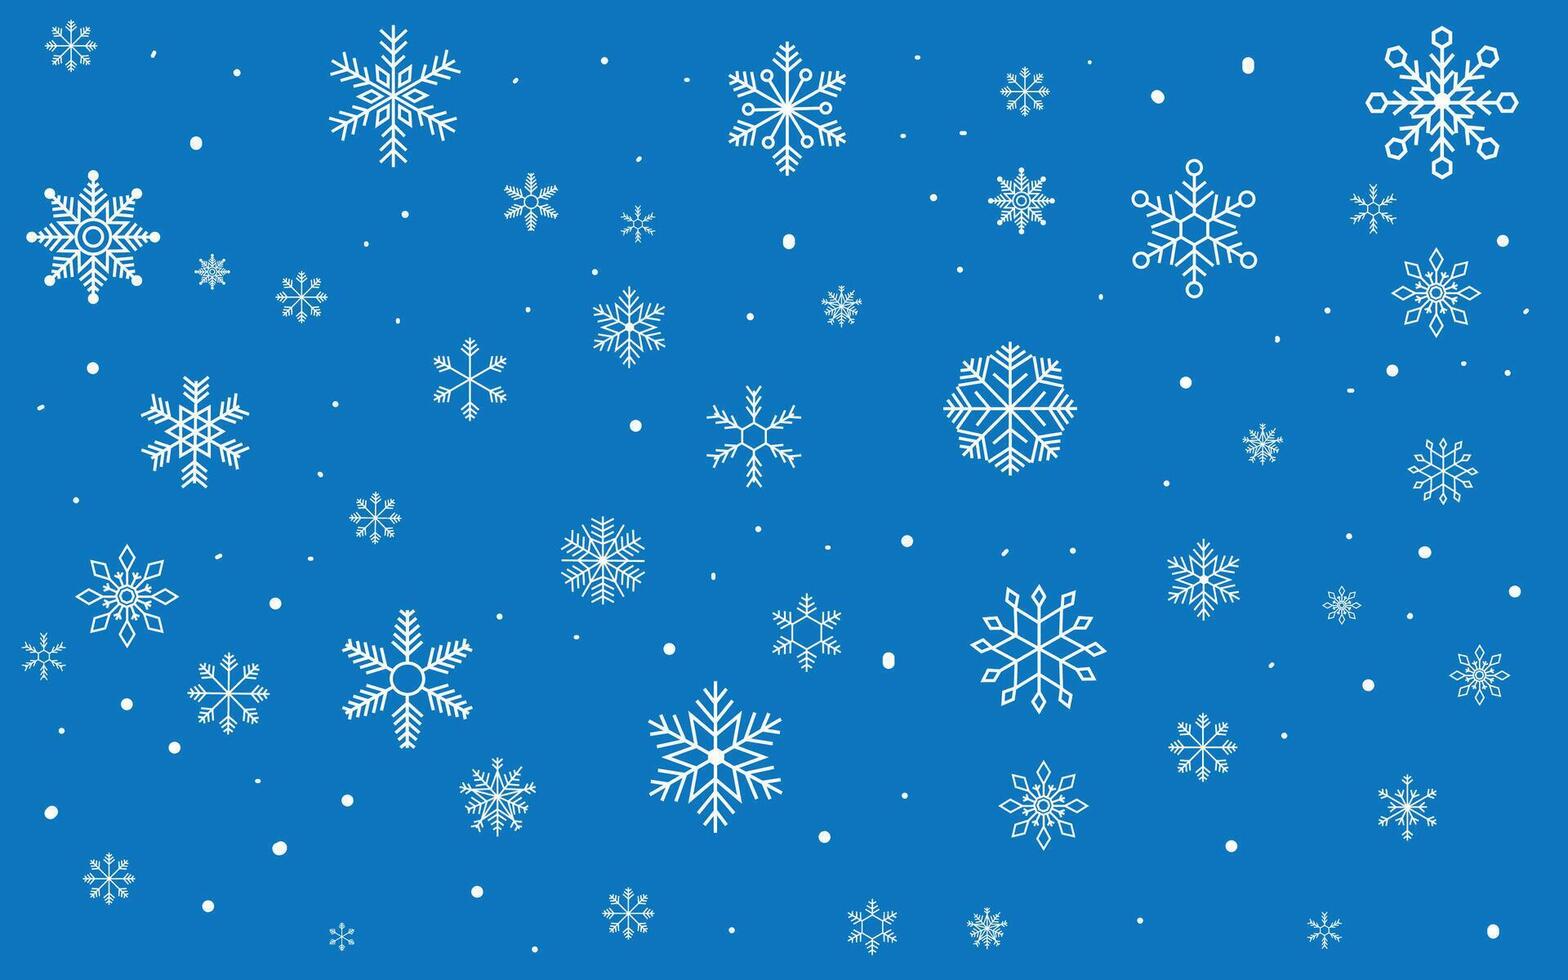 que cae copos de nieve. invierno nieve polvo fiesta decorativo elementos, estacional cielo nevada nevada congelado clima simbolos vector antecedentes